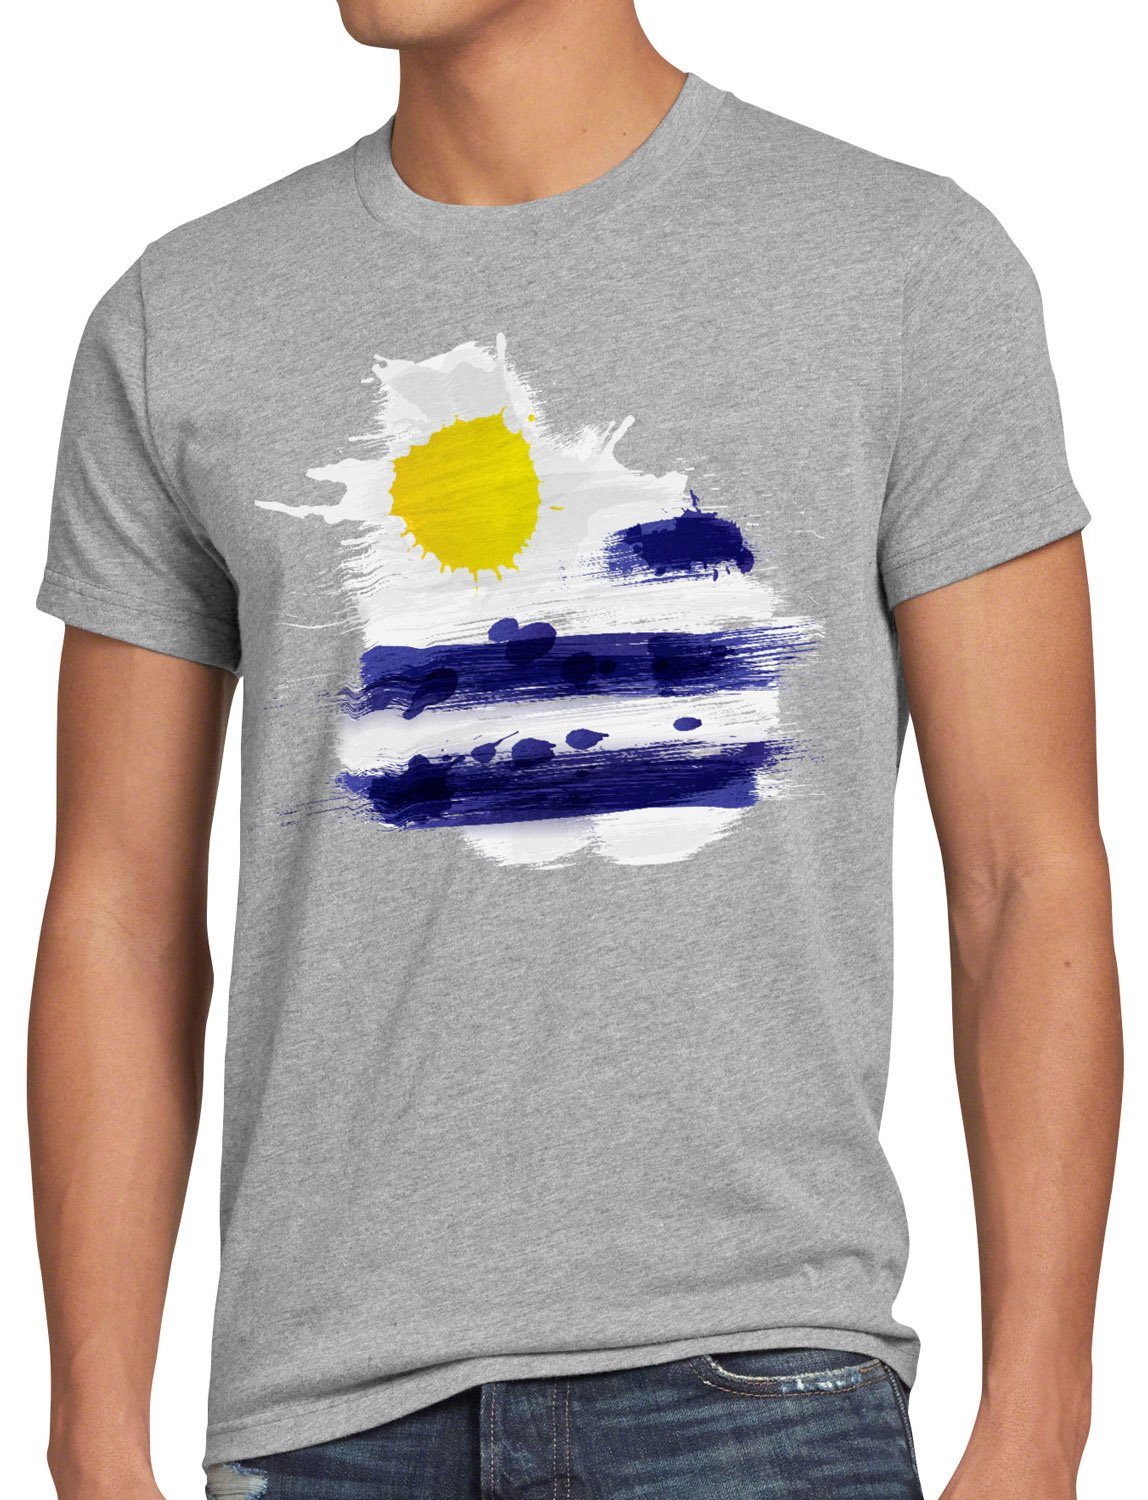 EM Herren T-Shirt Uruguay Print-Shirt Fußball grau meliert style3 WM Flag Sport Flagge Fahne